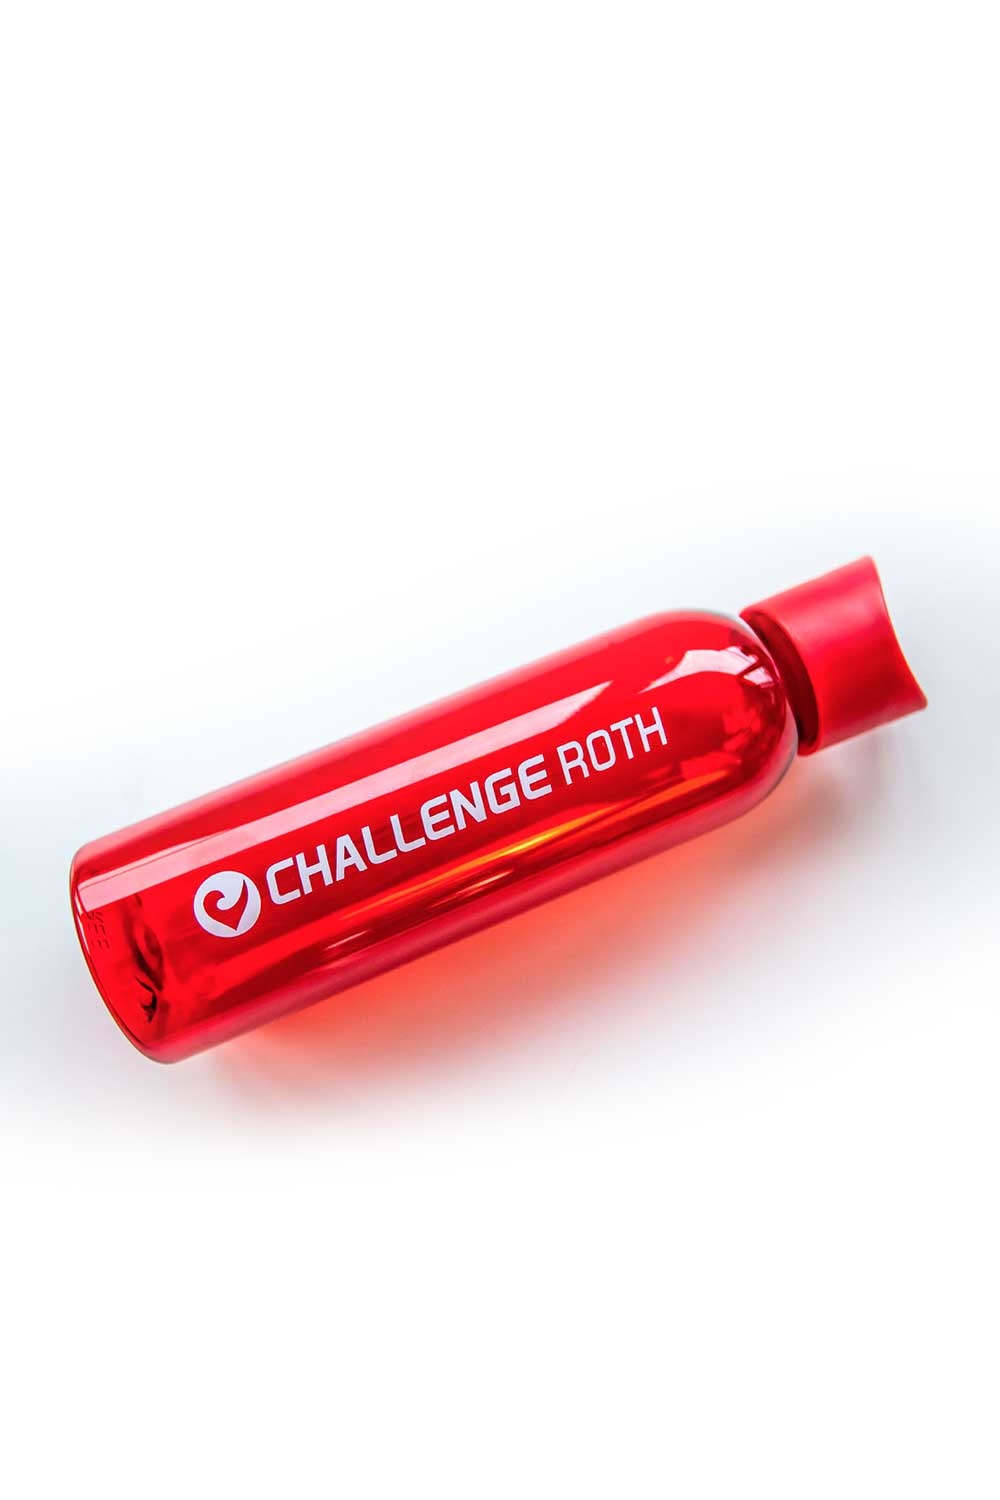 Bottle Challenge Roth